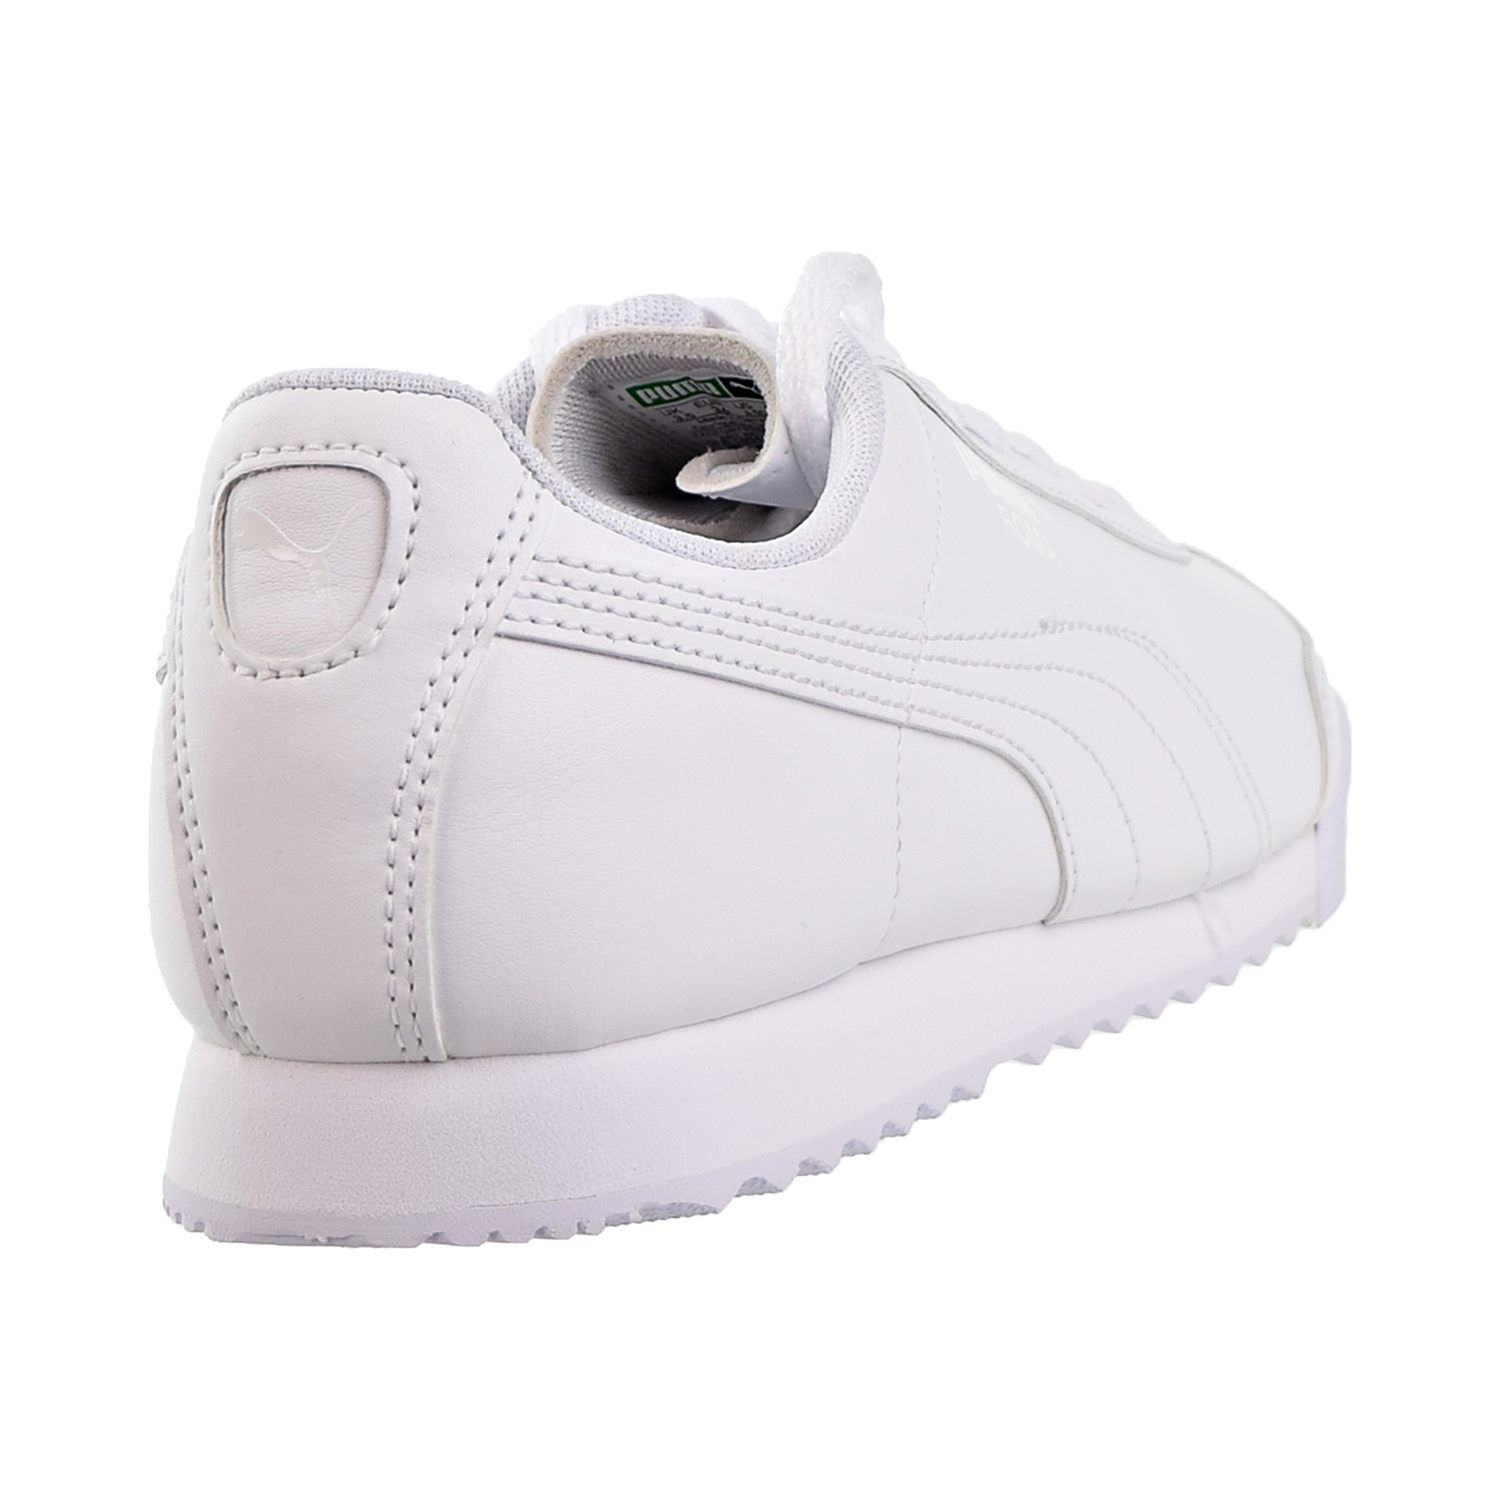 Puma Roma Basic JR Big Kids Shoes White-Light Gray 354259-14 | eBay